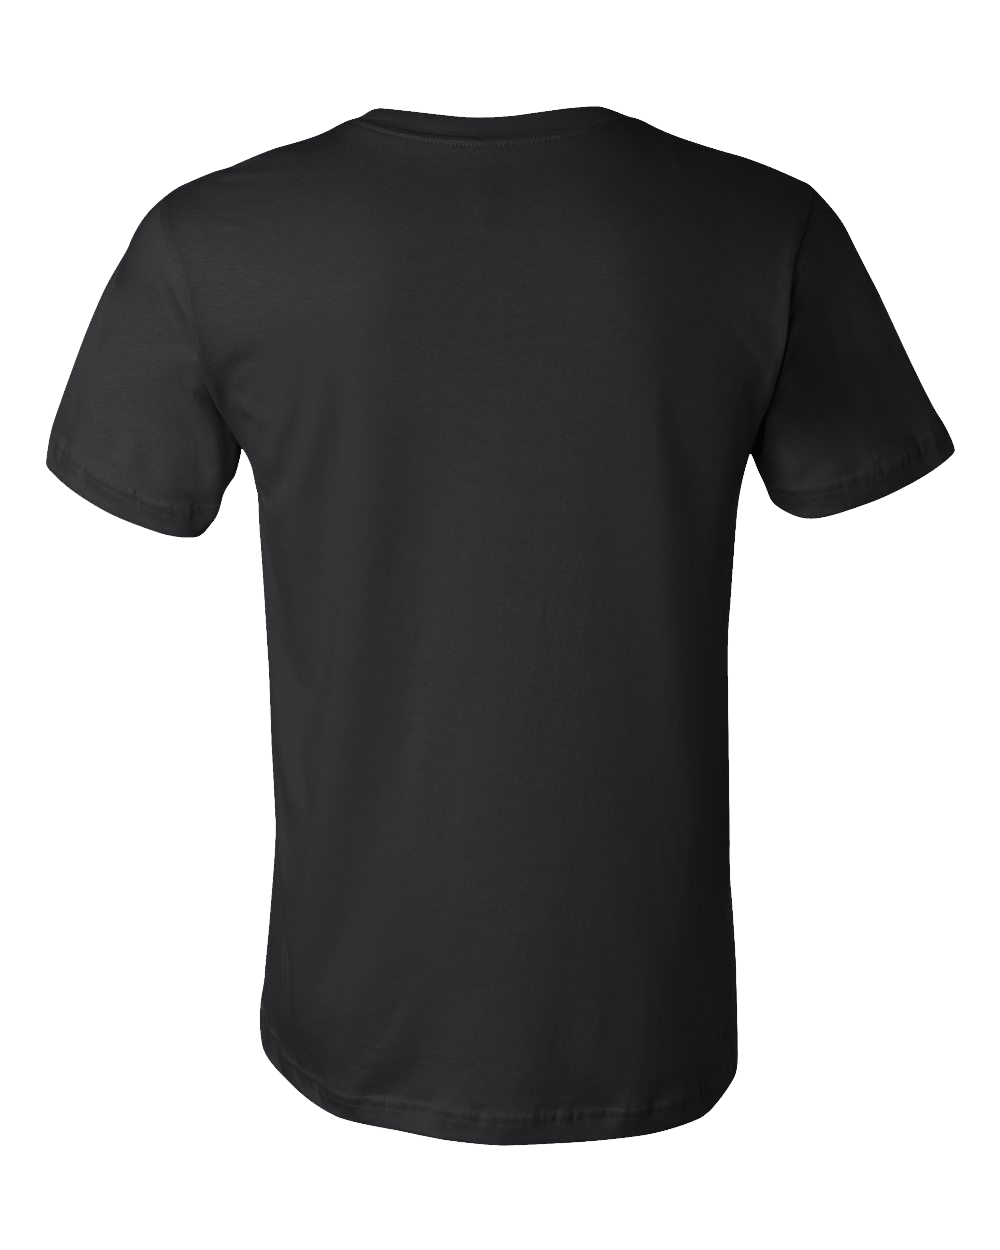 Standard Black Malvern, AR | Retro, Vintage Style Arkansas Pride  T-shirt